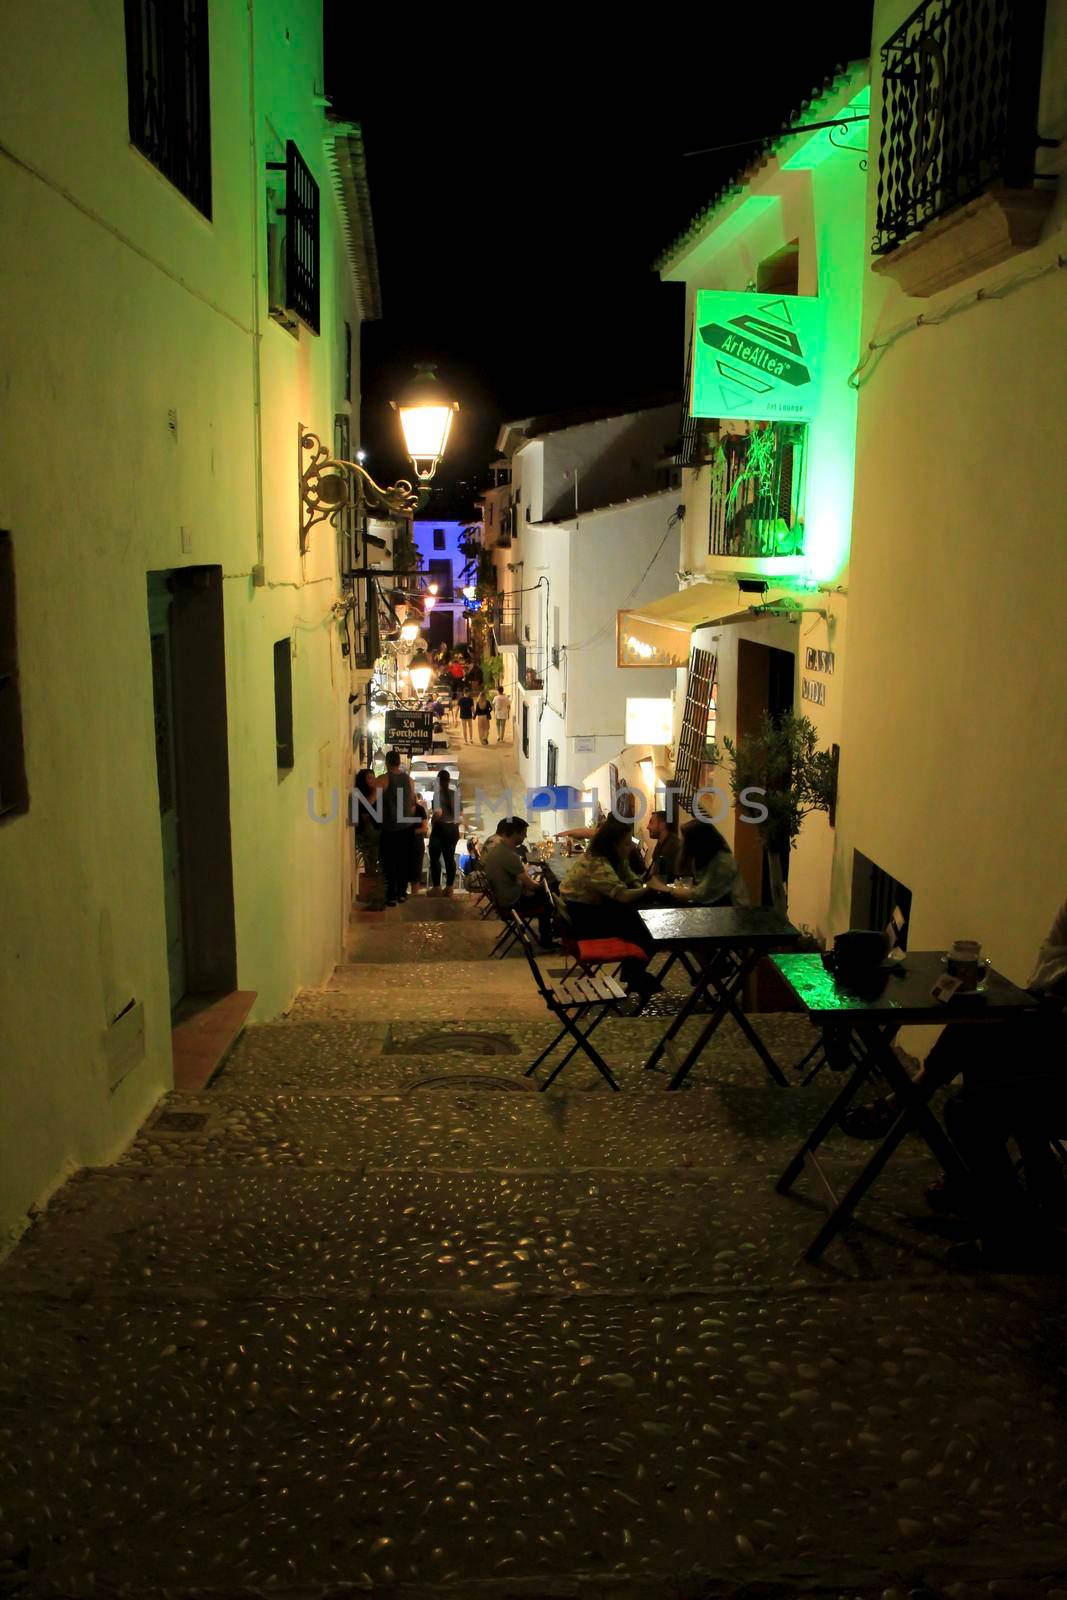 People enjoying in bar terraces in Altea at night by soniabonet